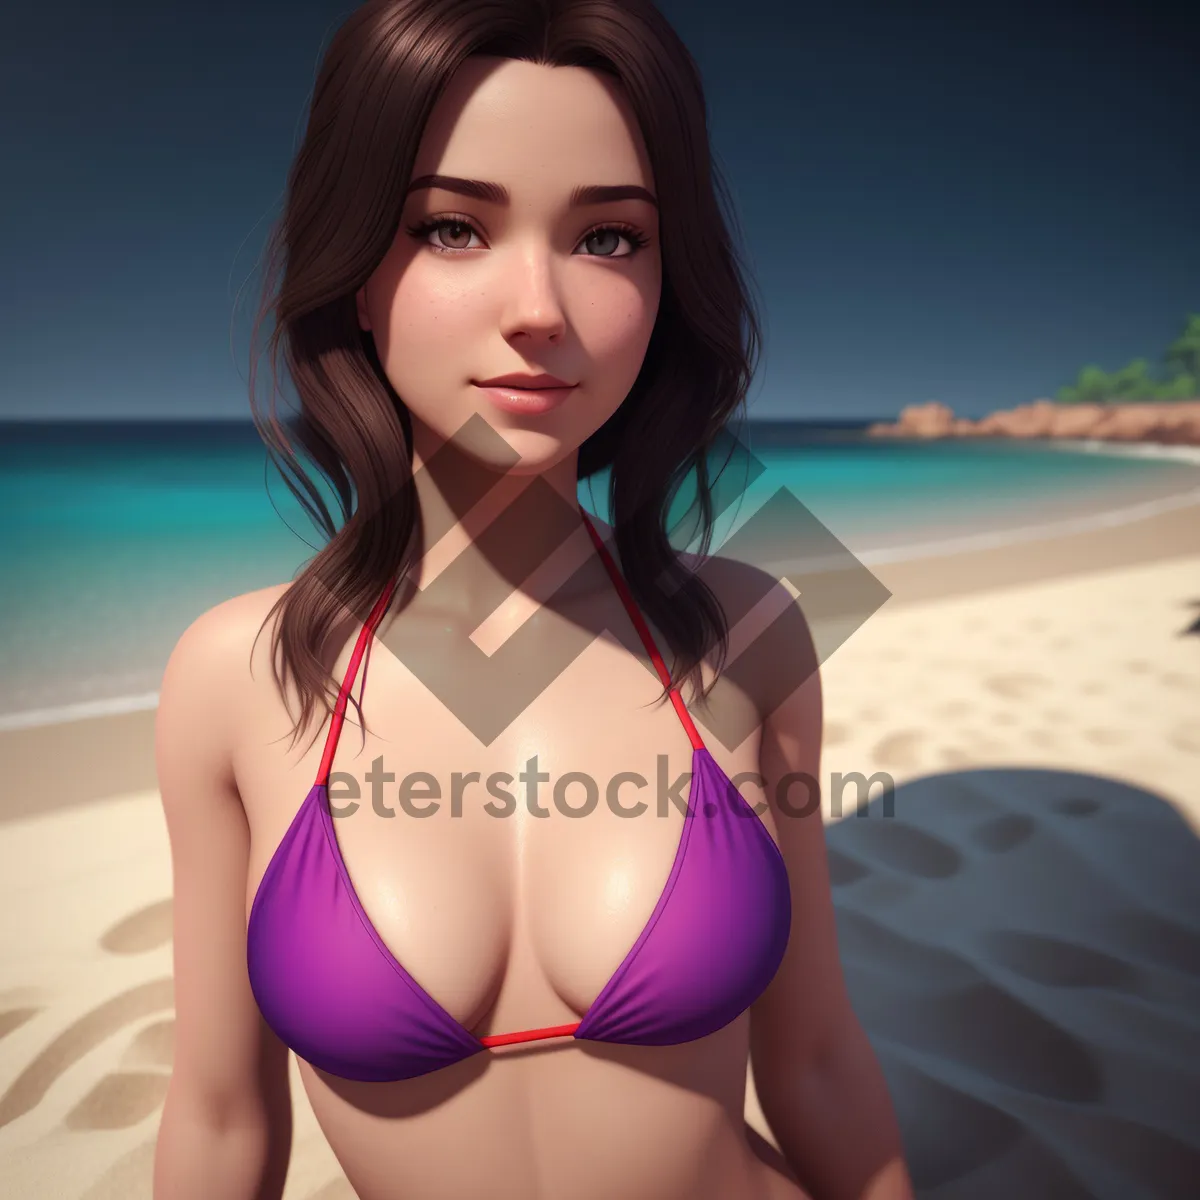 Picture of Stunning Beach Babe in Seductive Bikini